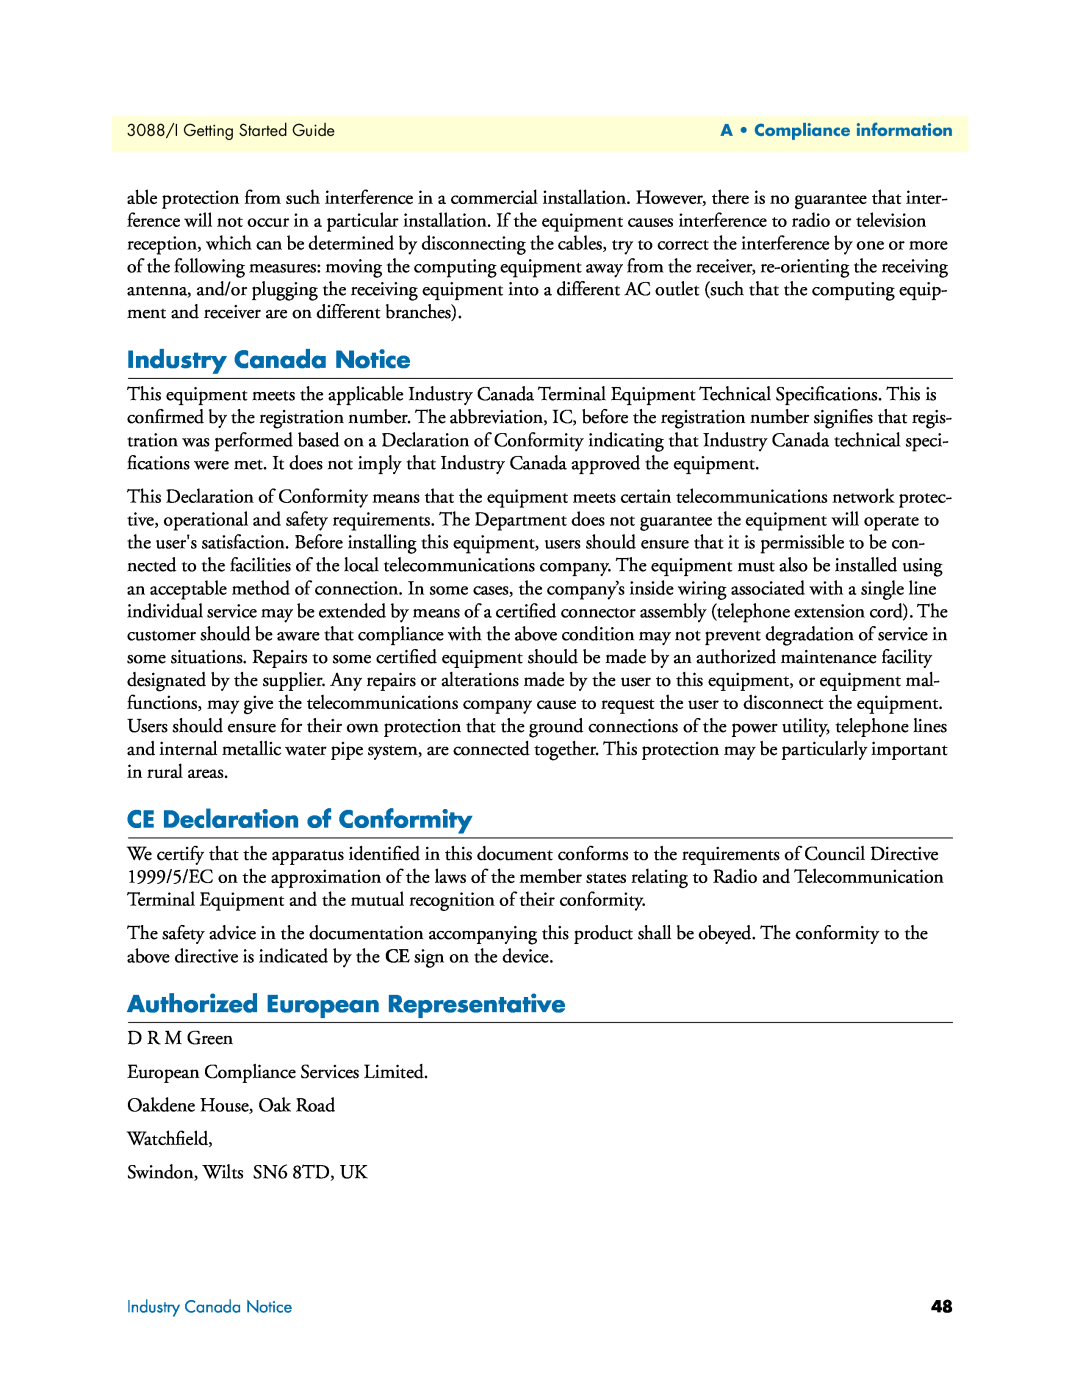 Patton electronic Model 3088/I Industry Canada Notice, CE Declaration of Conformity, Authorized European Representative 